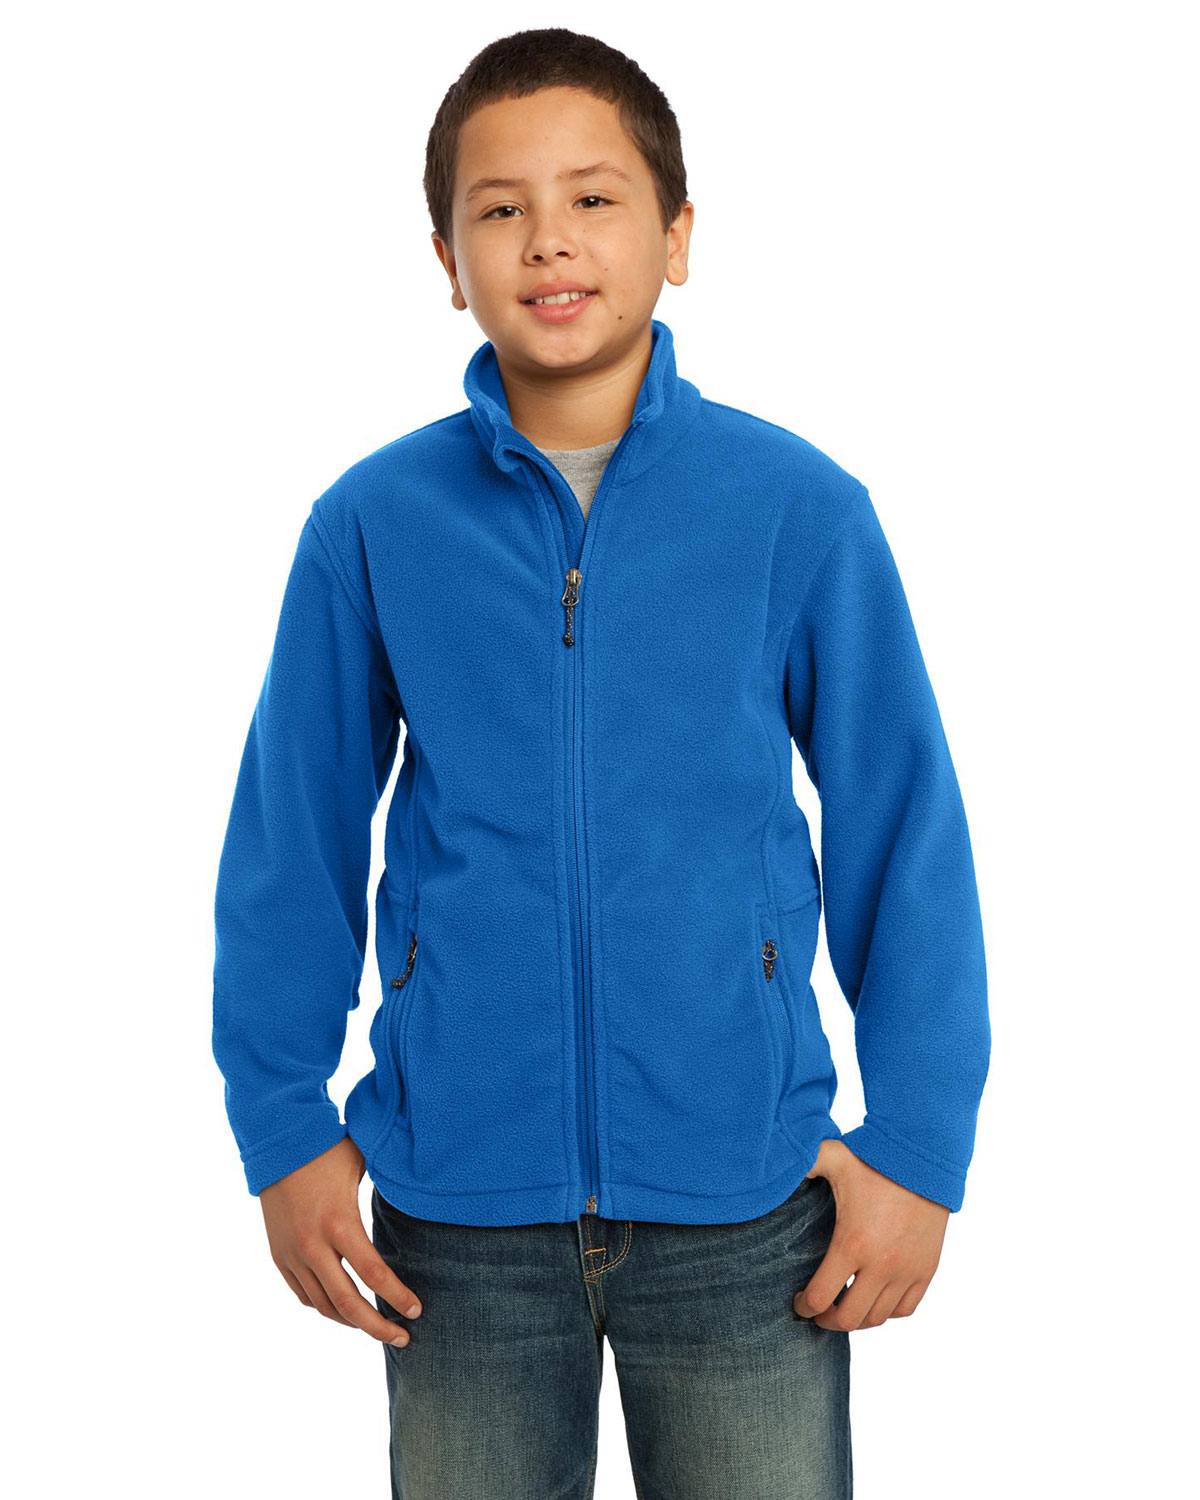 Port Authority Y217 Boys Value Fleece Jacket at Apparelstation